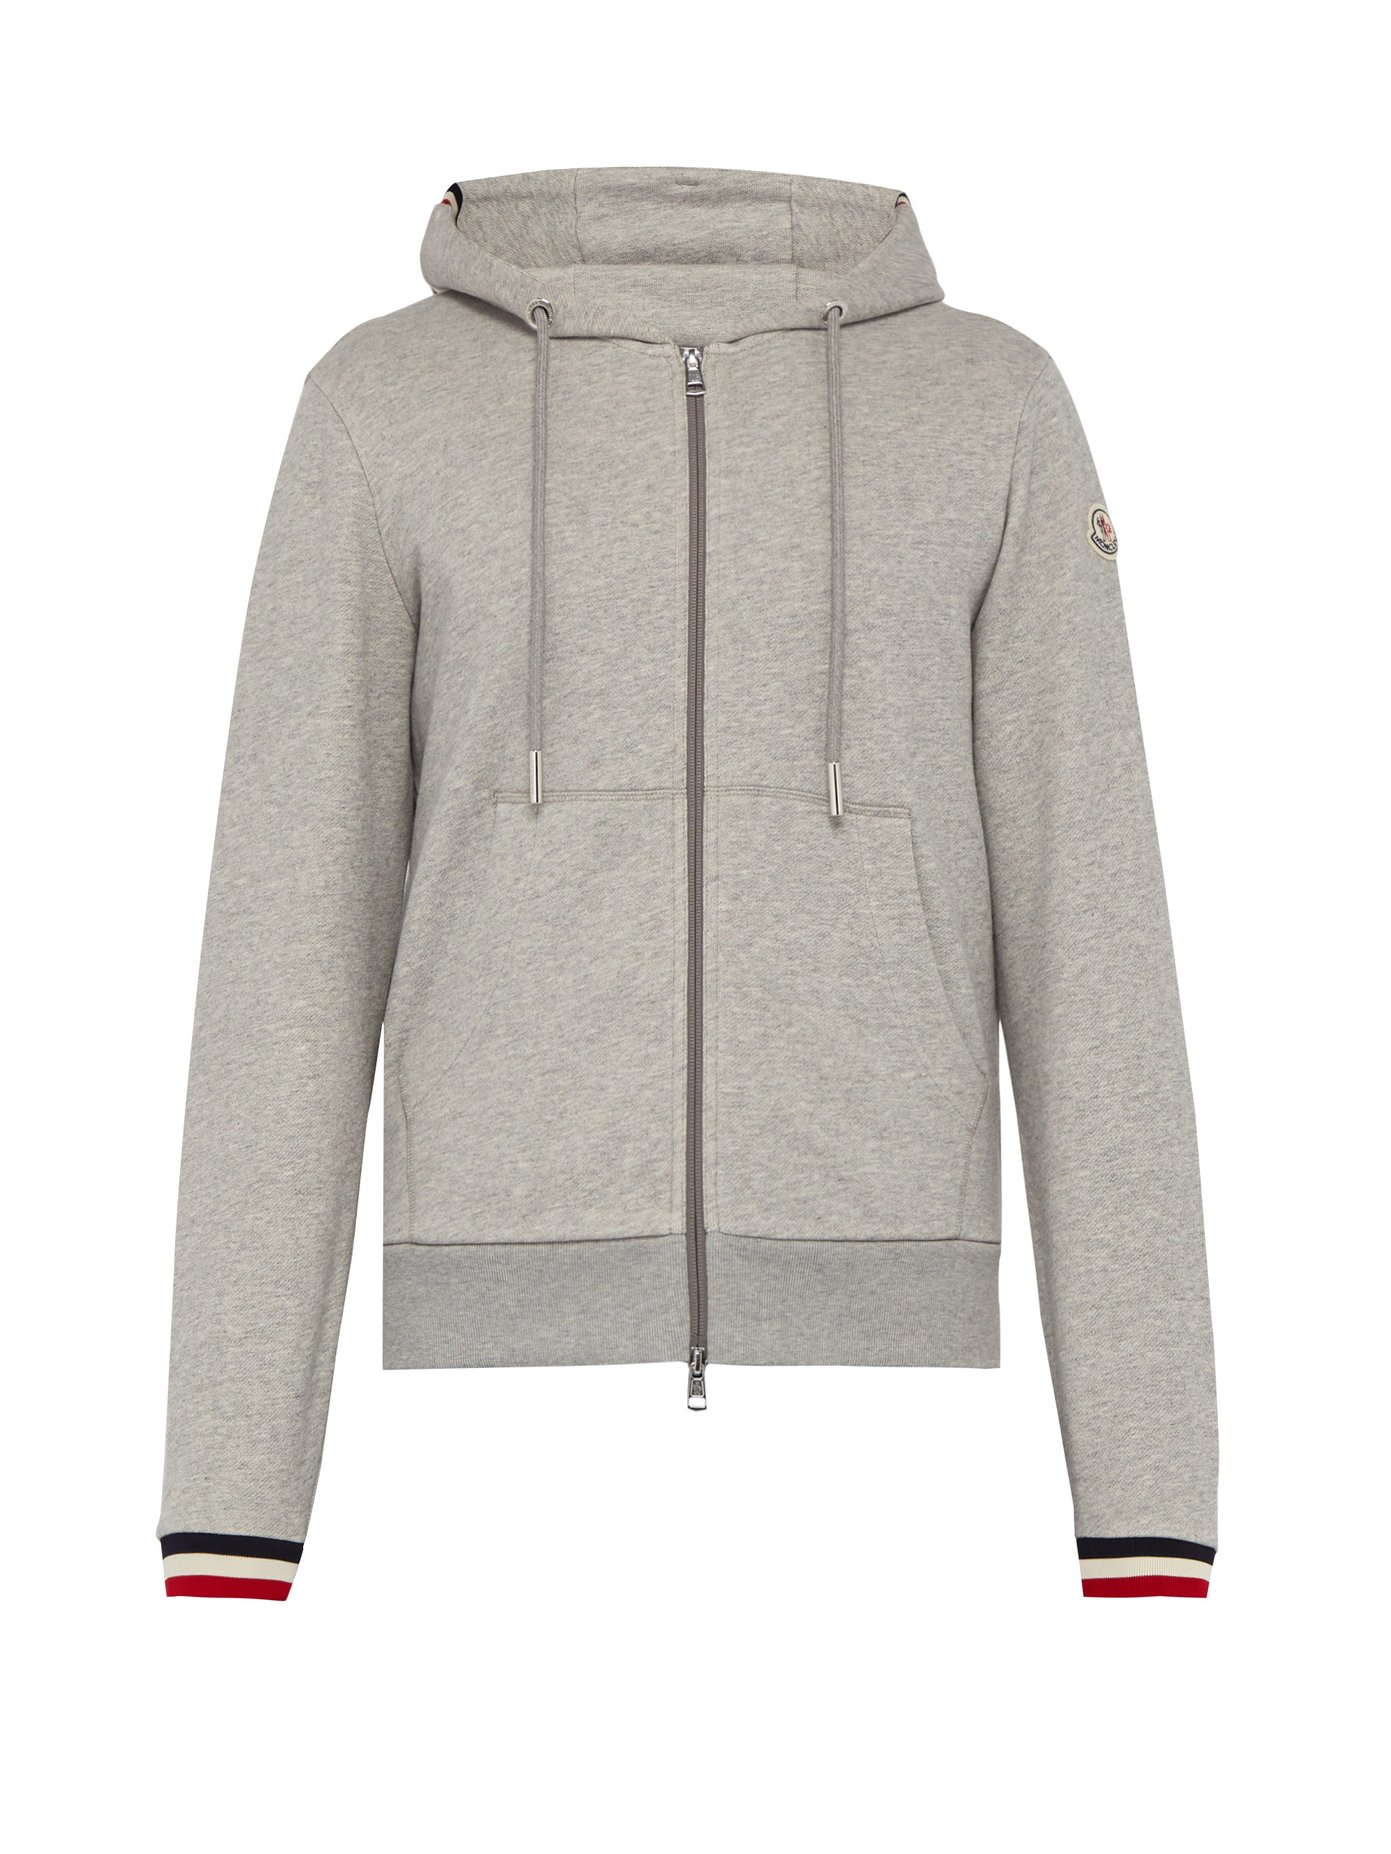 moncler grey zip hoodie